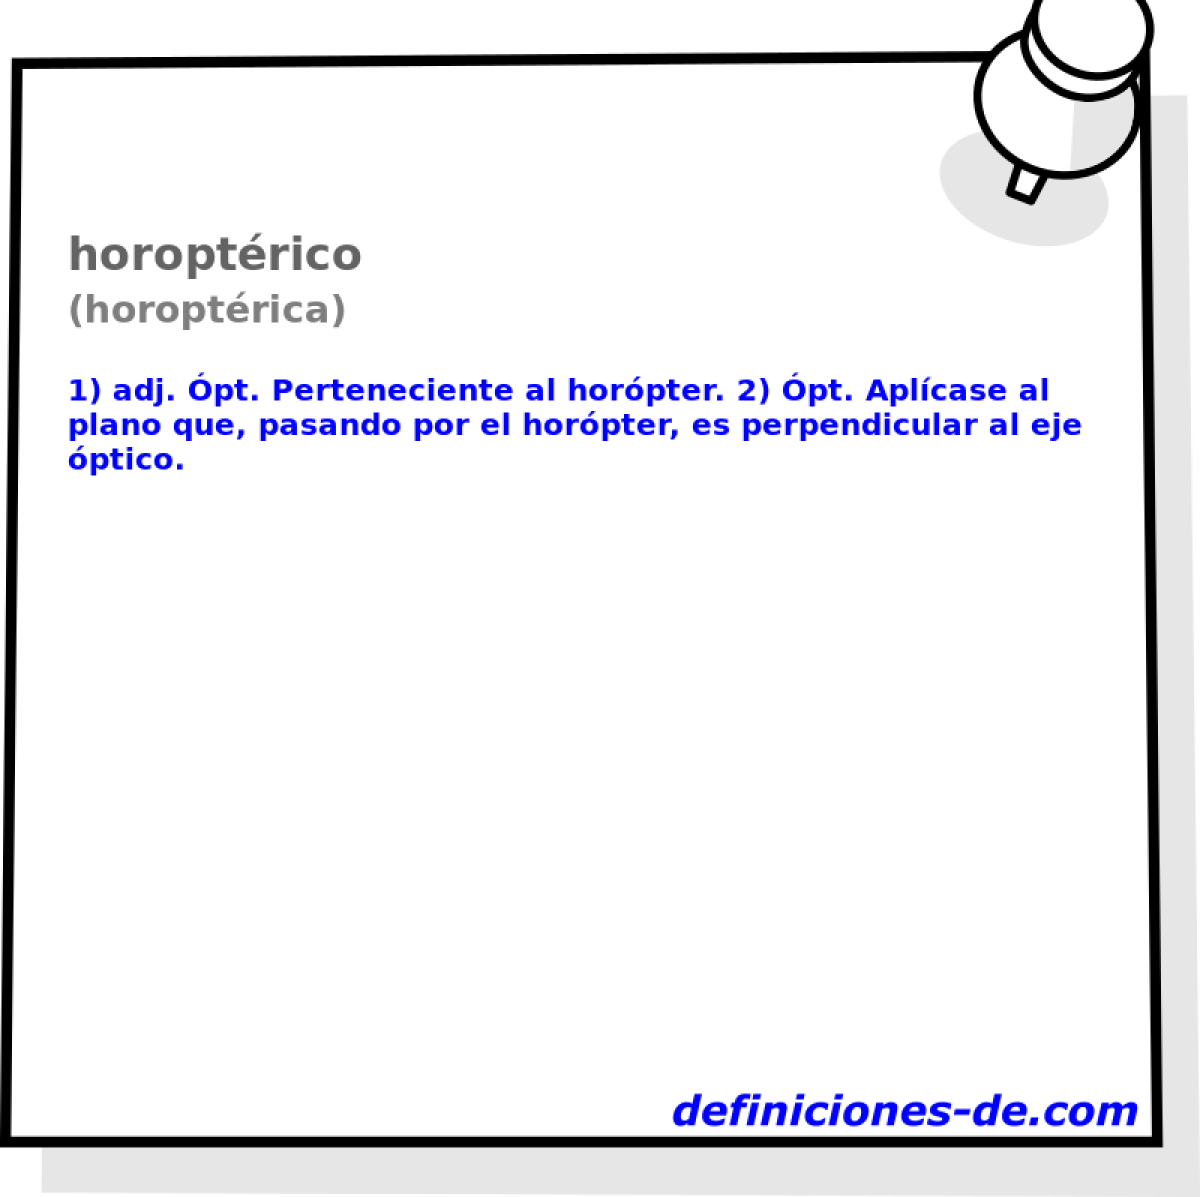 horoptrico (horoptrica)